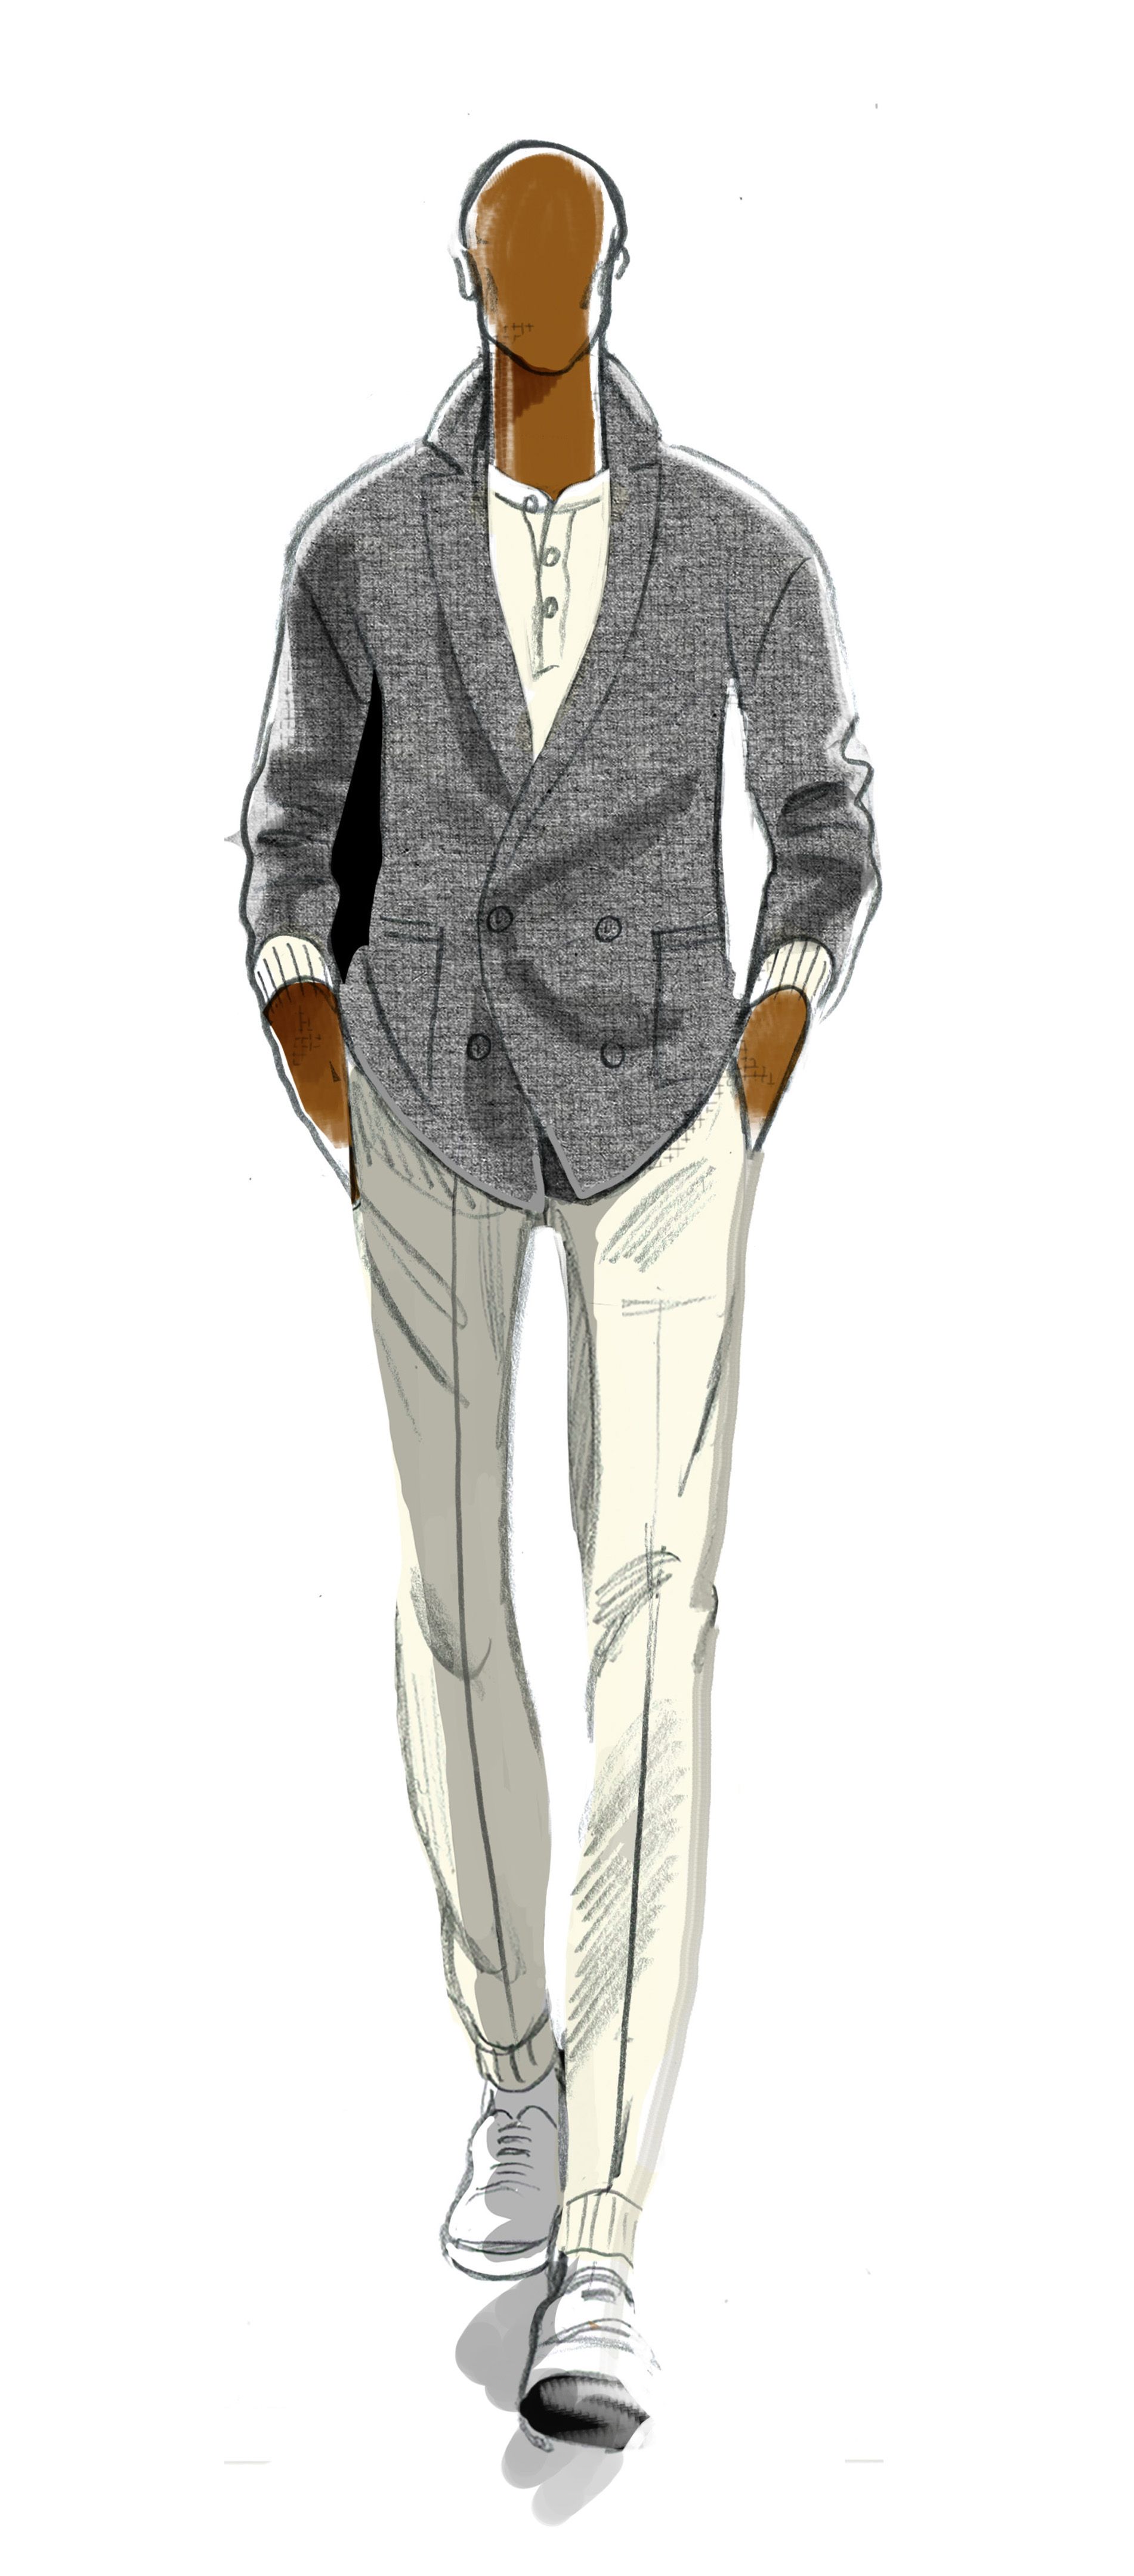 Style Guide: How to Dress Like Michael B. Jordan